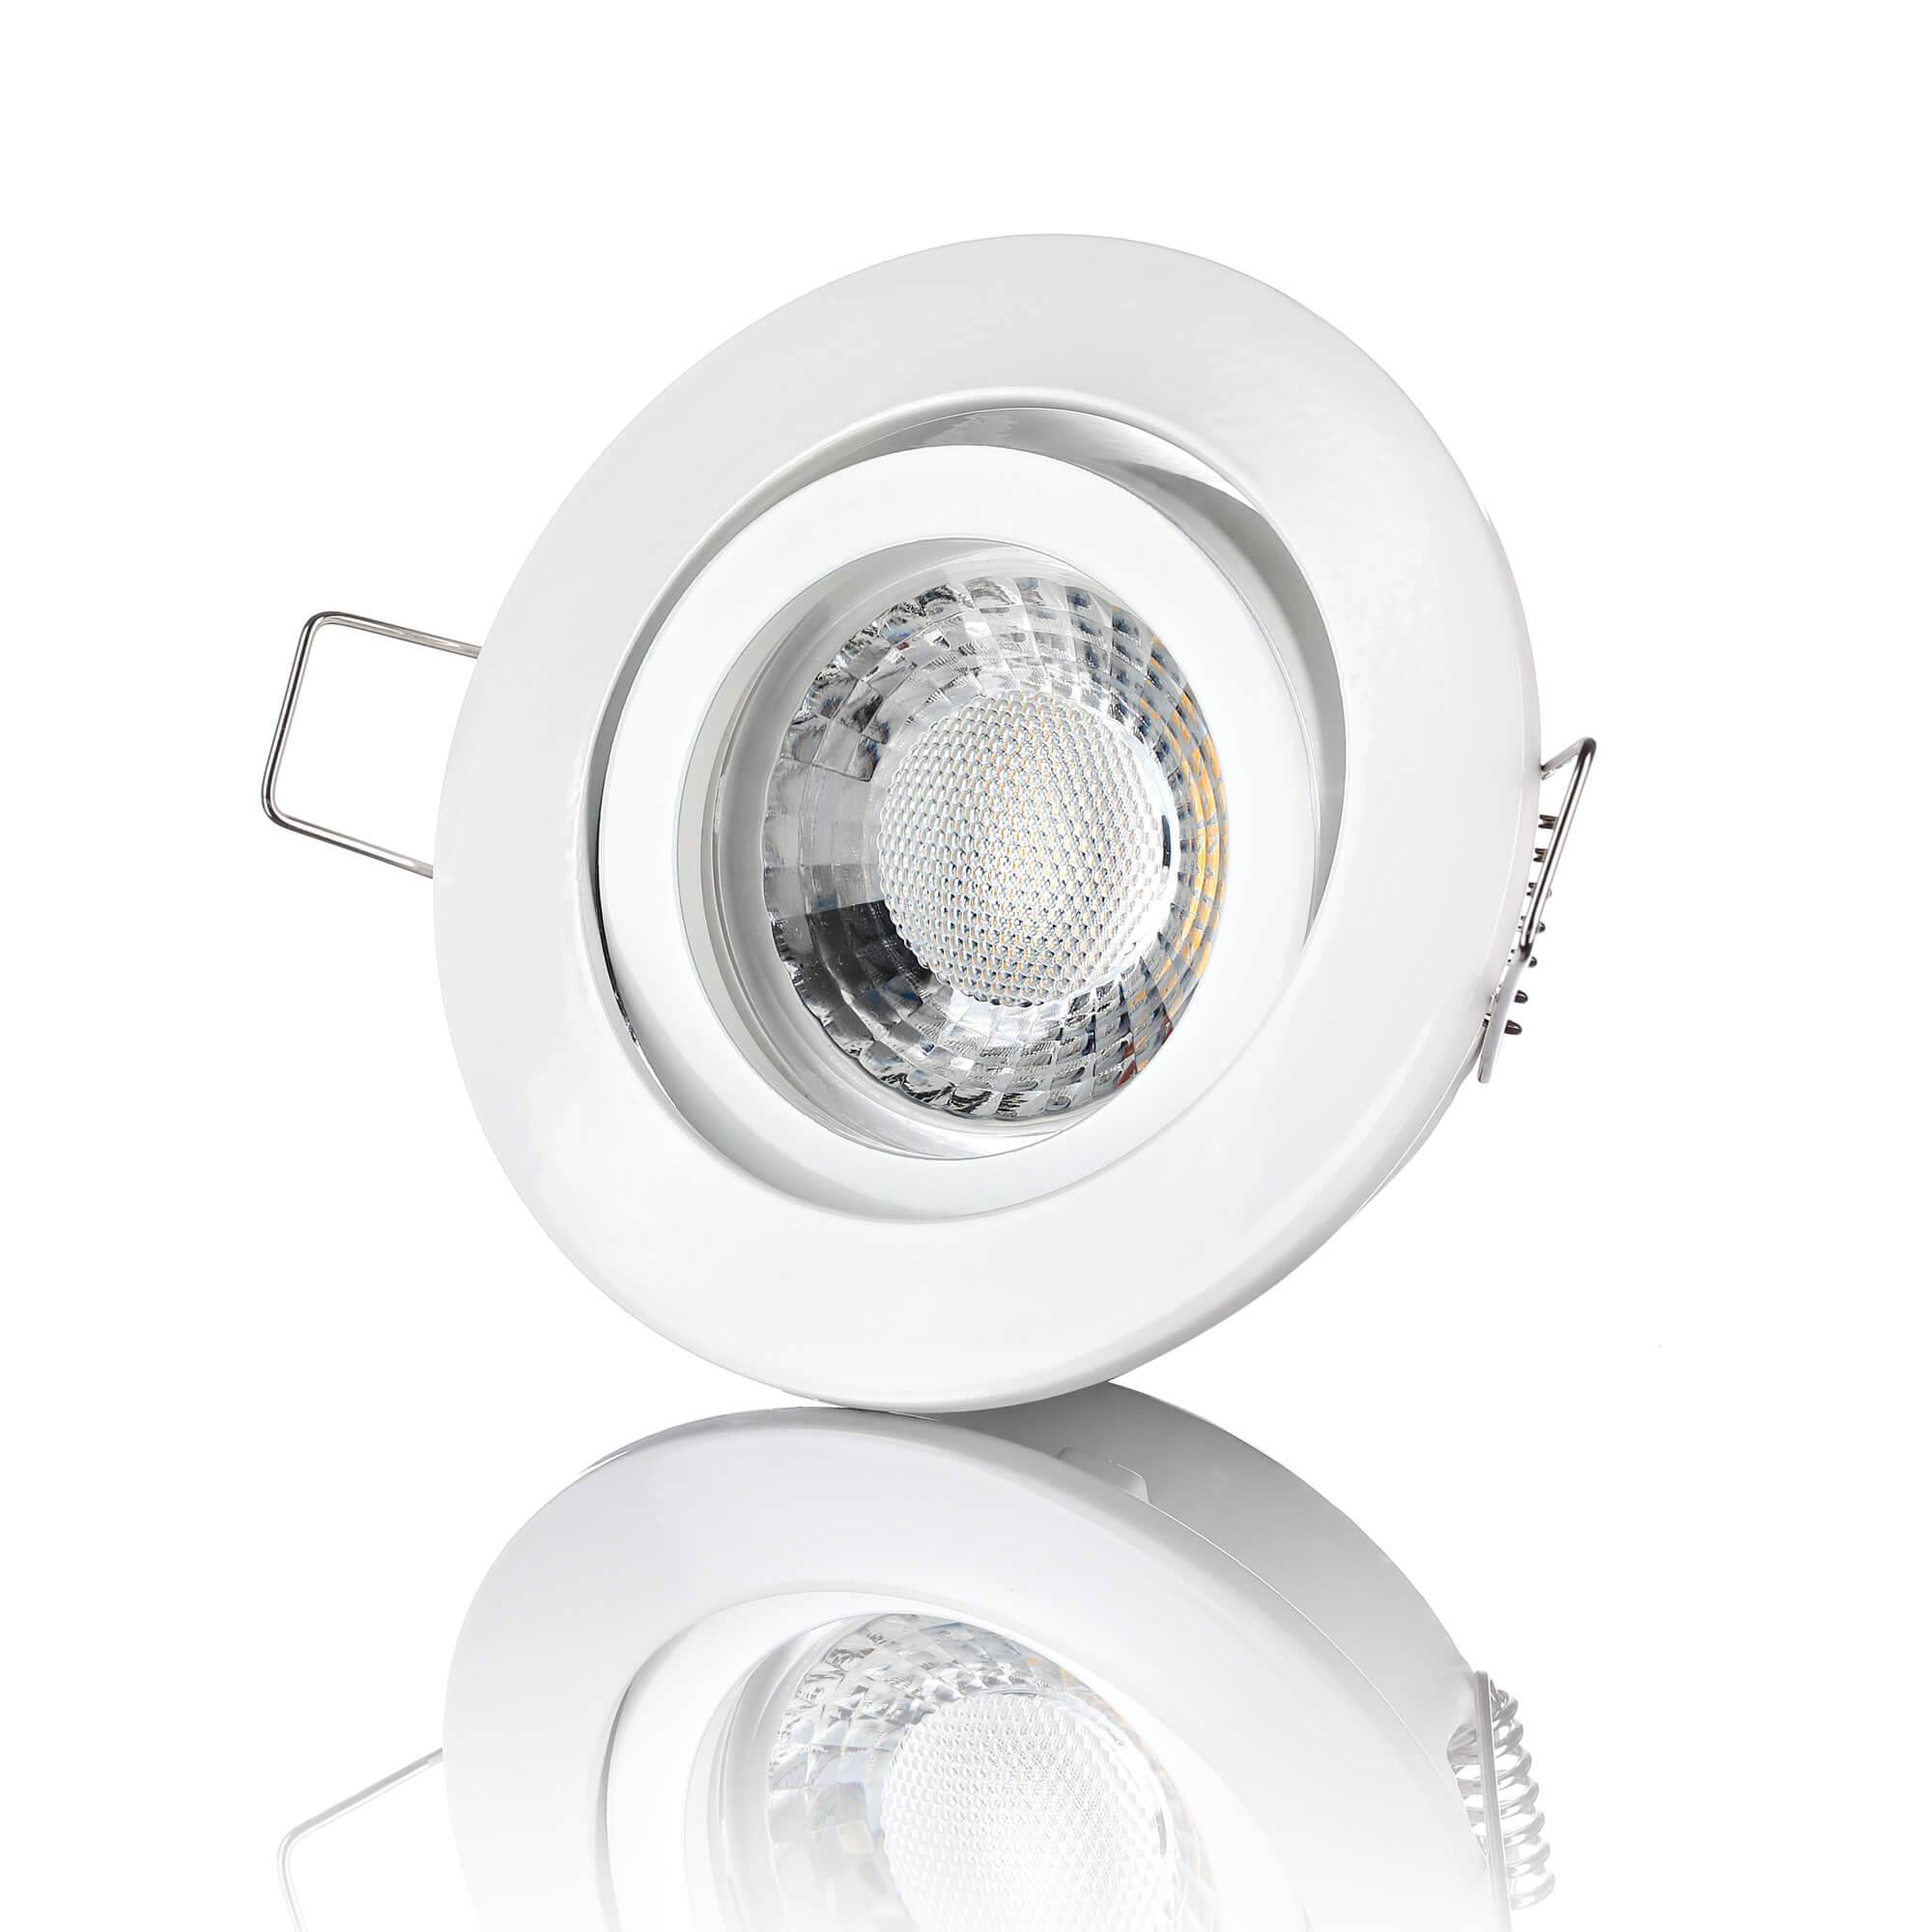 LED Einbaustrahler Flach - Weiß Rund 5W LED Dimmbar - Rapid